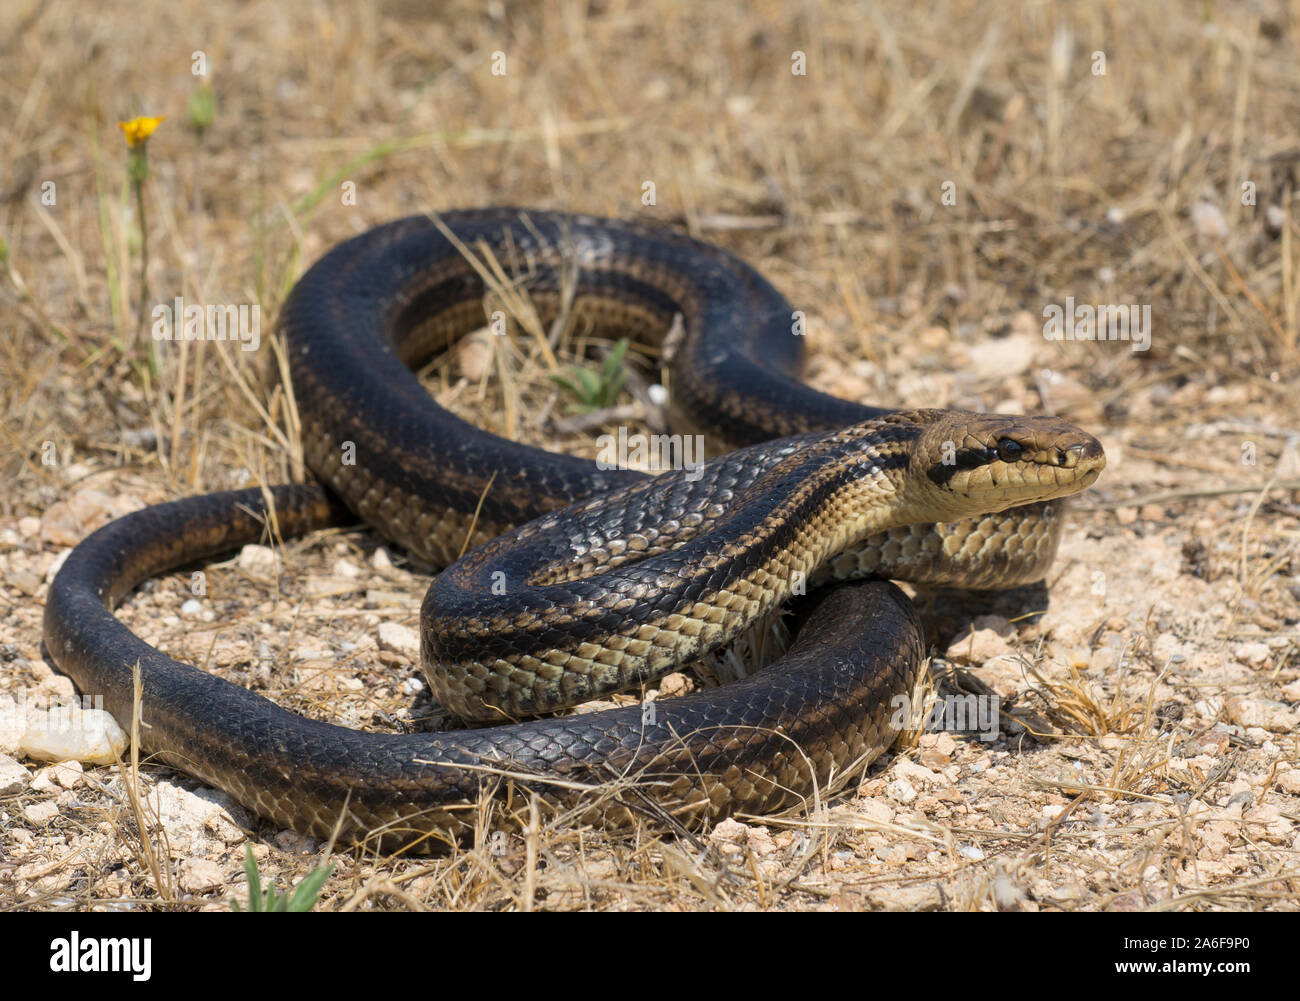 Large very dark Four-lined Snake (Elaphe quatuorlineata) on the Island of Ios, Cyclades Islands, Greece. Stock Photo